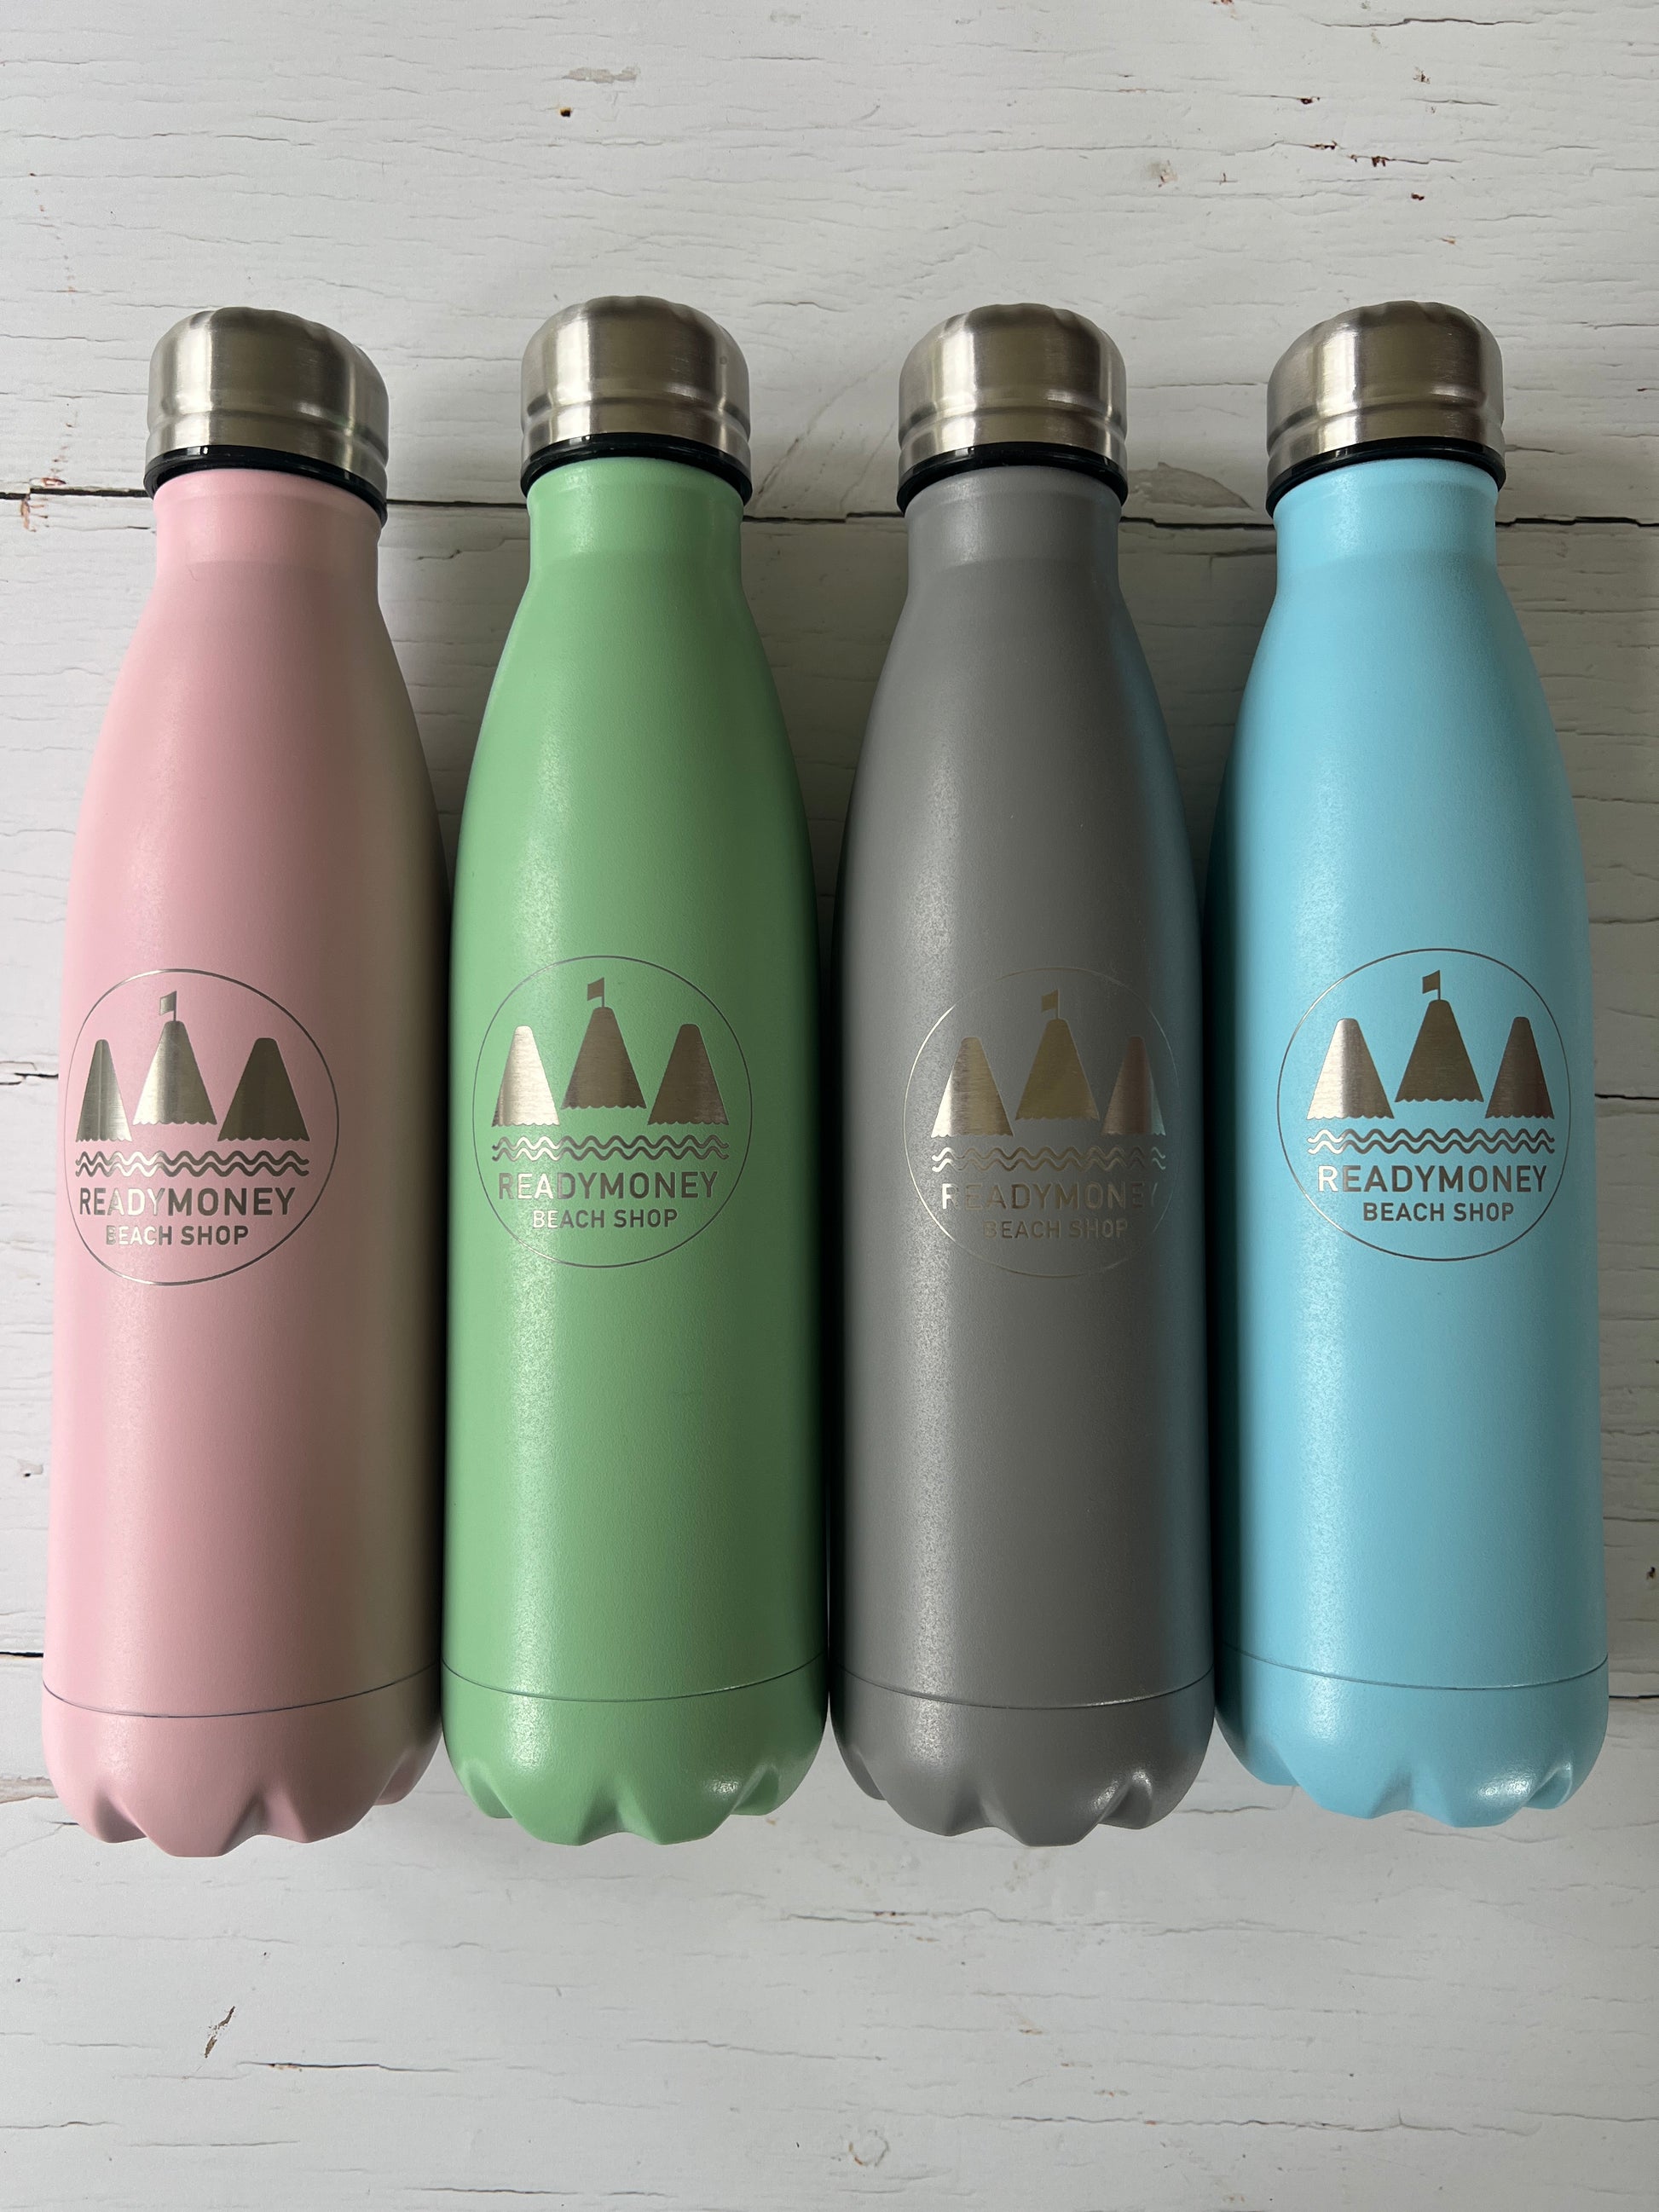 Four Readymoney Beach Shop Water bottles, pink, green, grey and blue